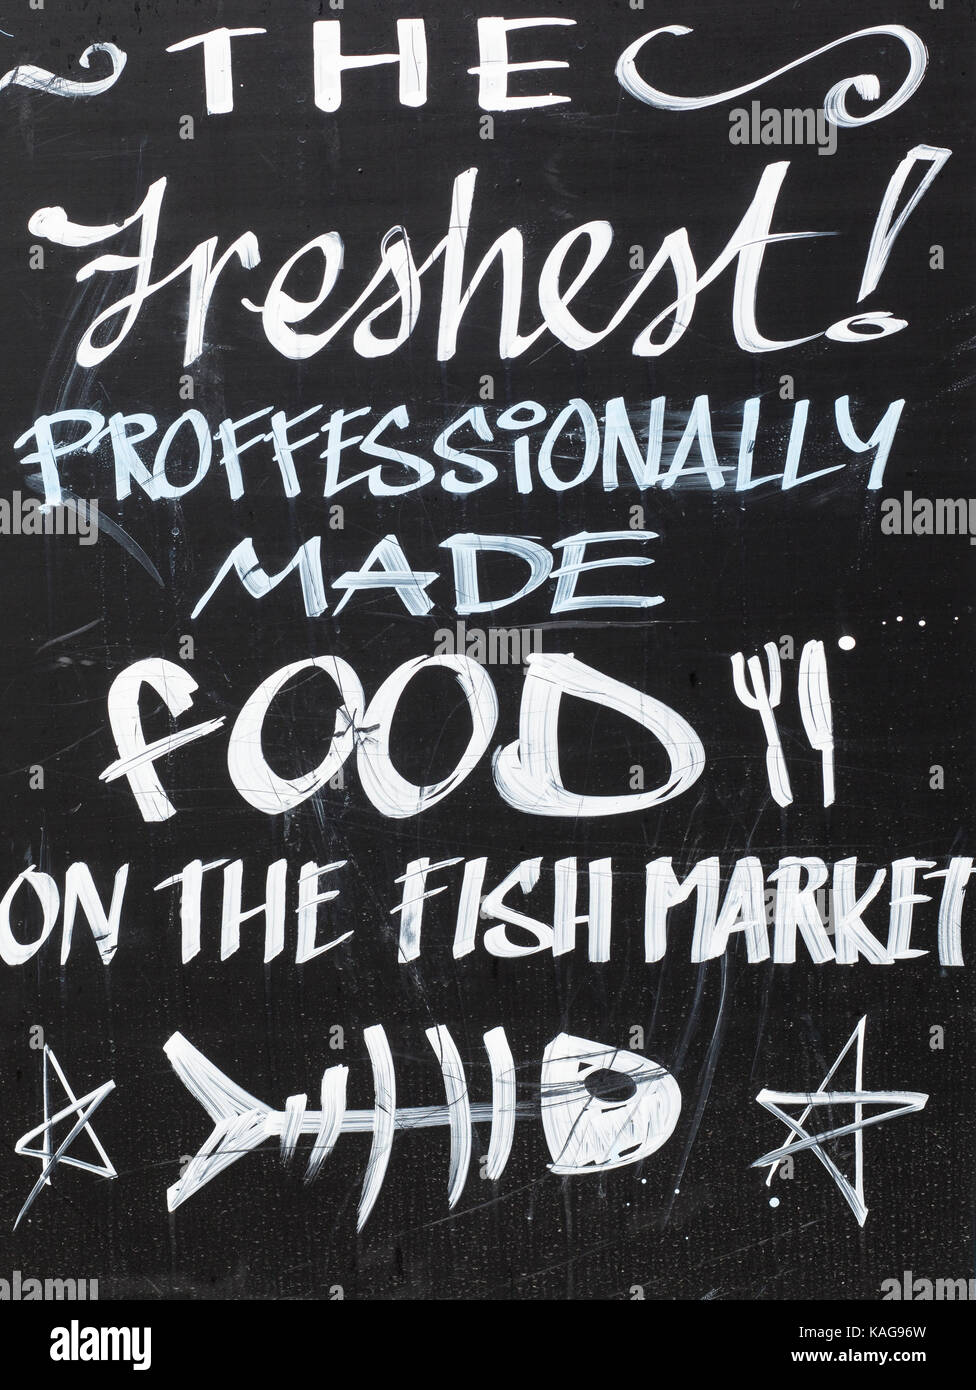 food announce - fish market Stock Photo